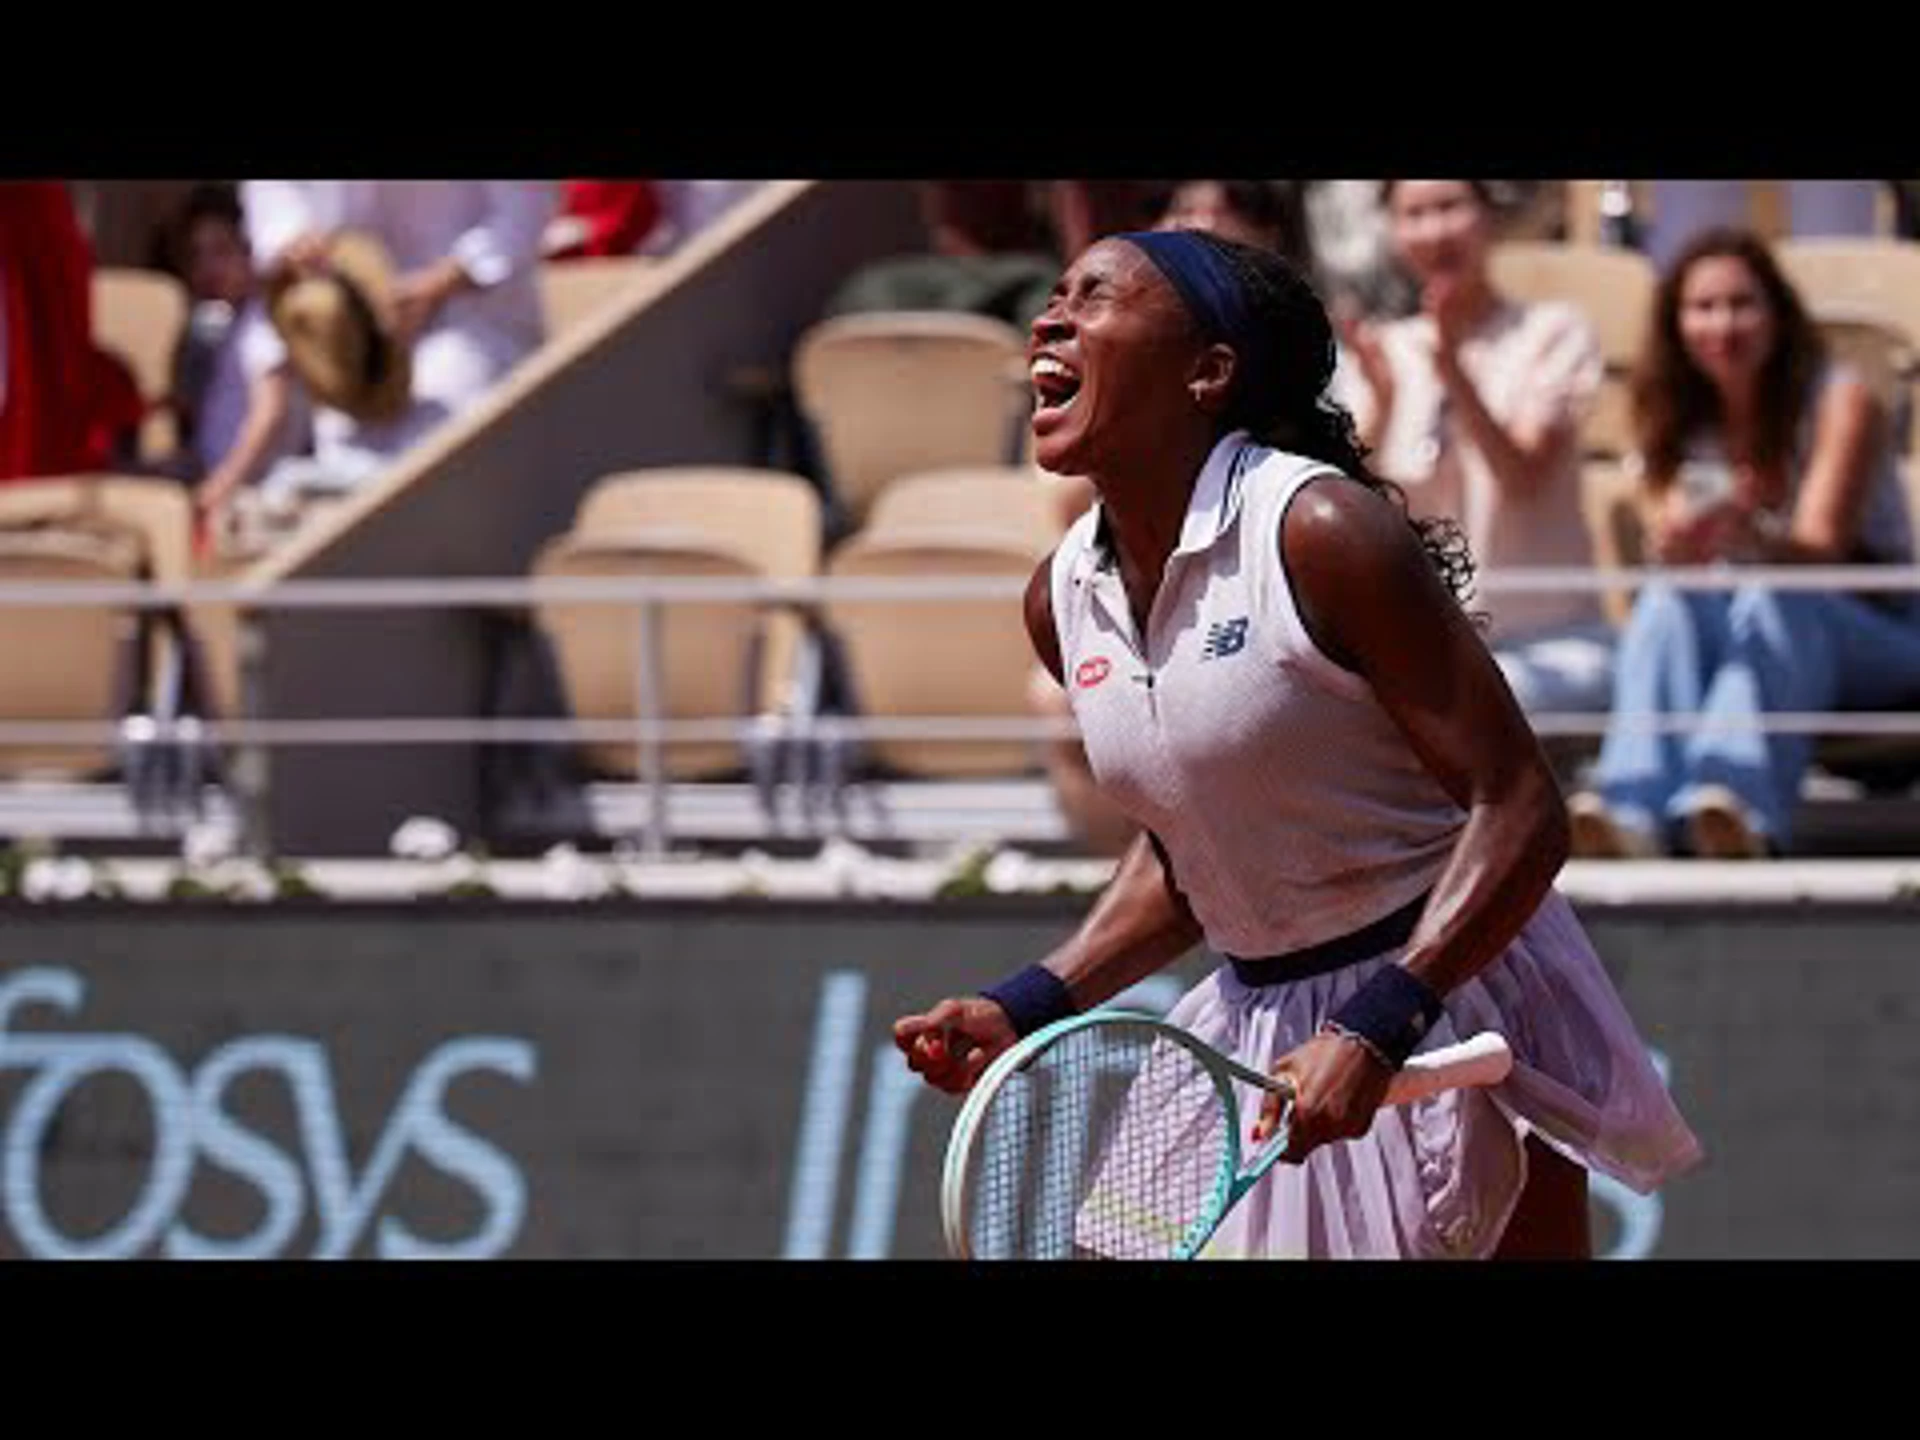 Coco Gauff v Ons Jabeur | Women's Singles | QF 1 | Highlights | Roland Garros